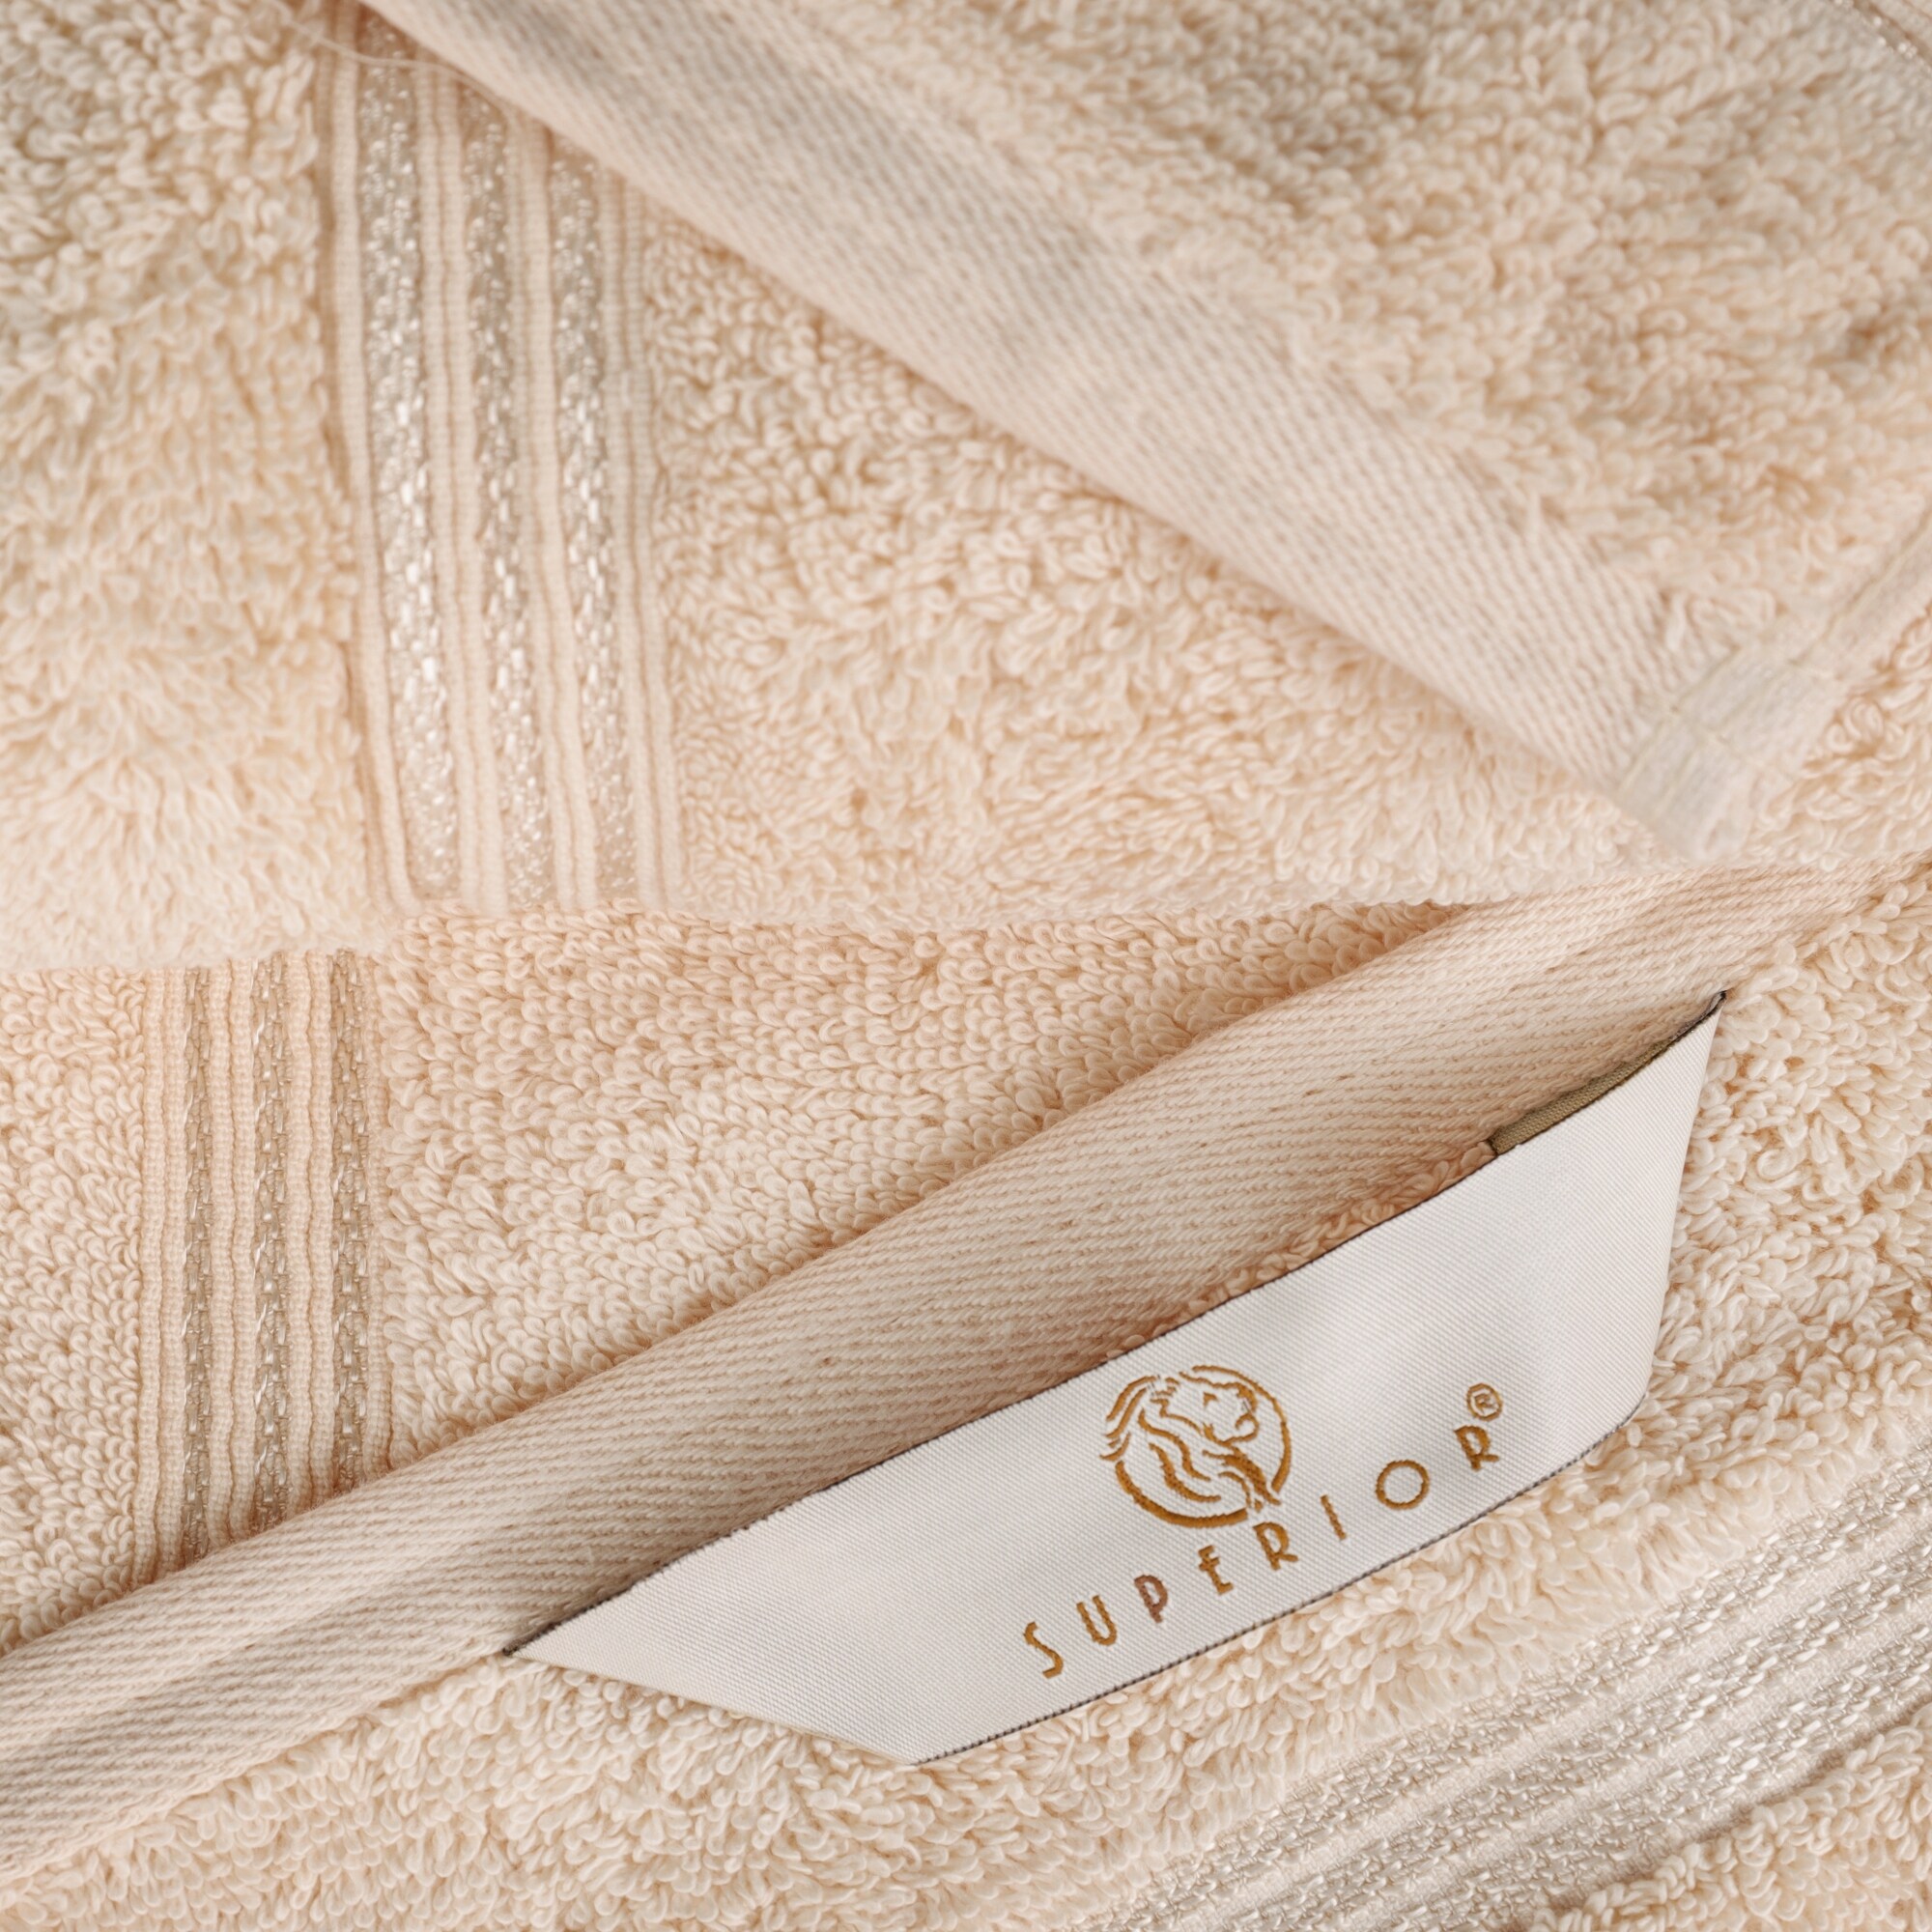 Superior Heritage Egyptian Cotton Heavyweight Bathroom Towel - Set of 12 -  On Sale - Bed Bath & Beyond - 38959388